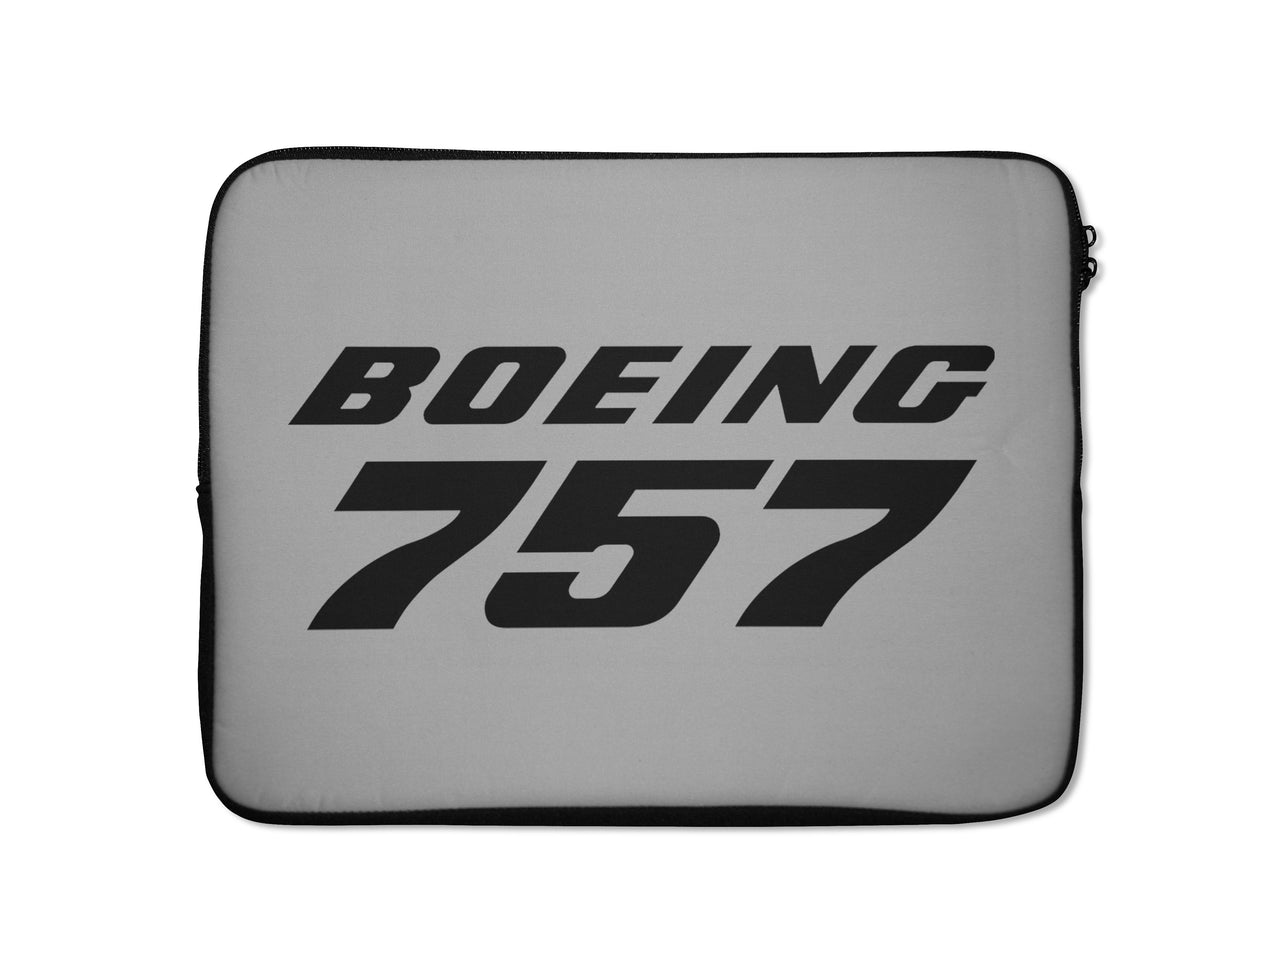 Boeing 757 & Text Designed Laptop & Tablet Cases